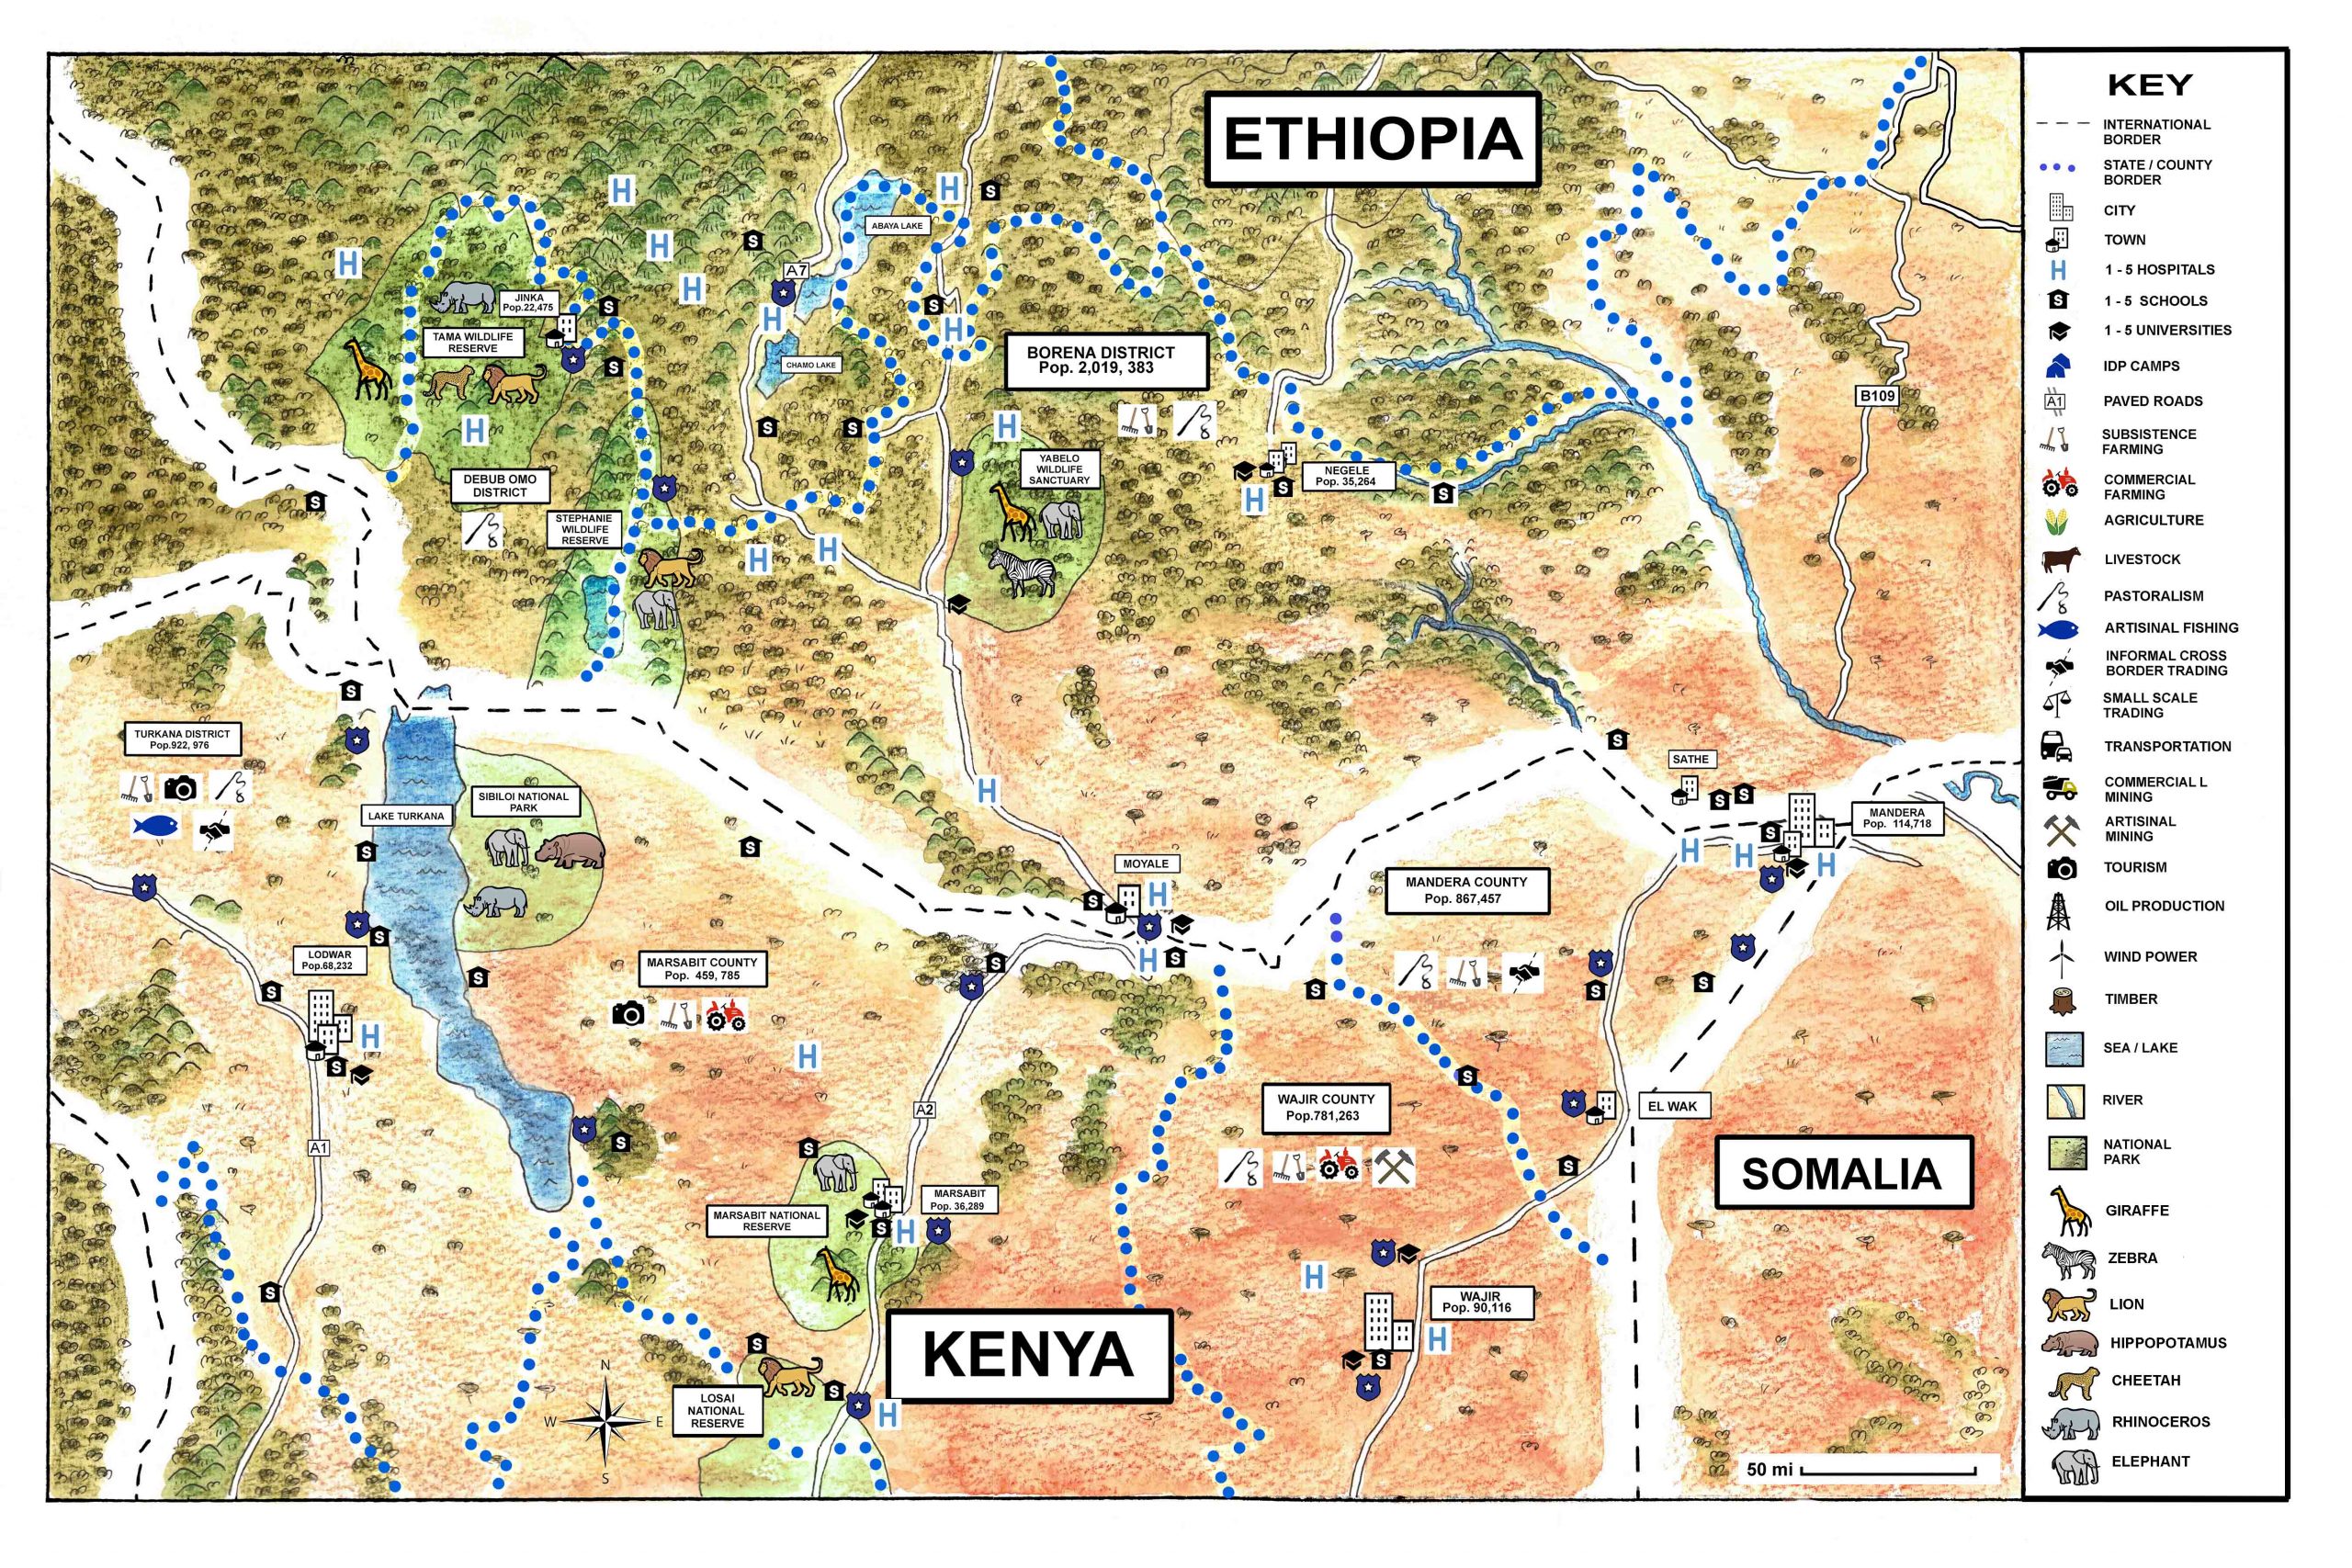 ETHIOPIA - KENYA_illustration